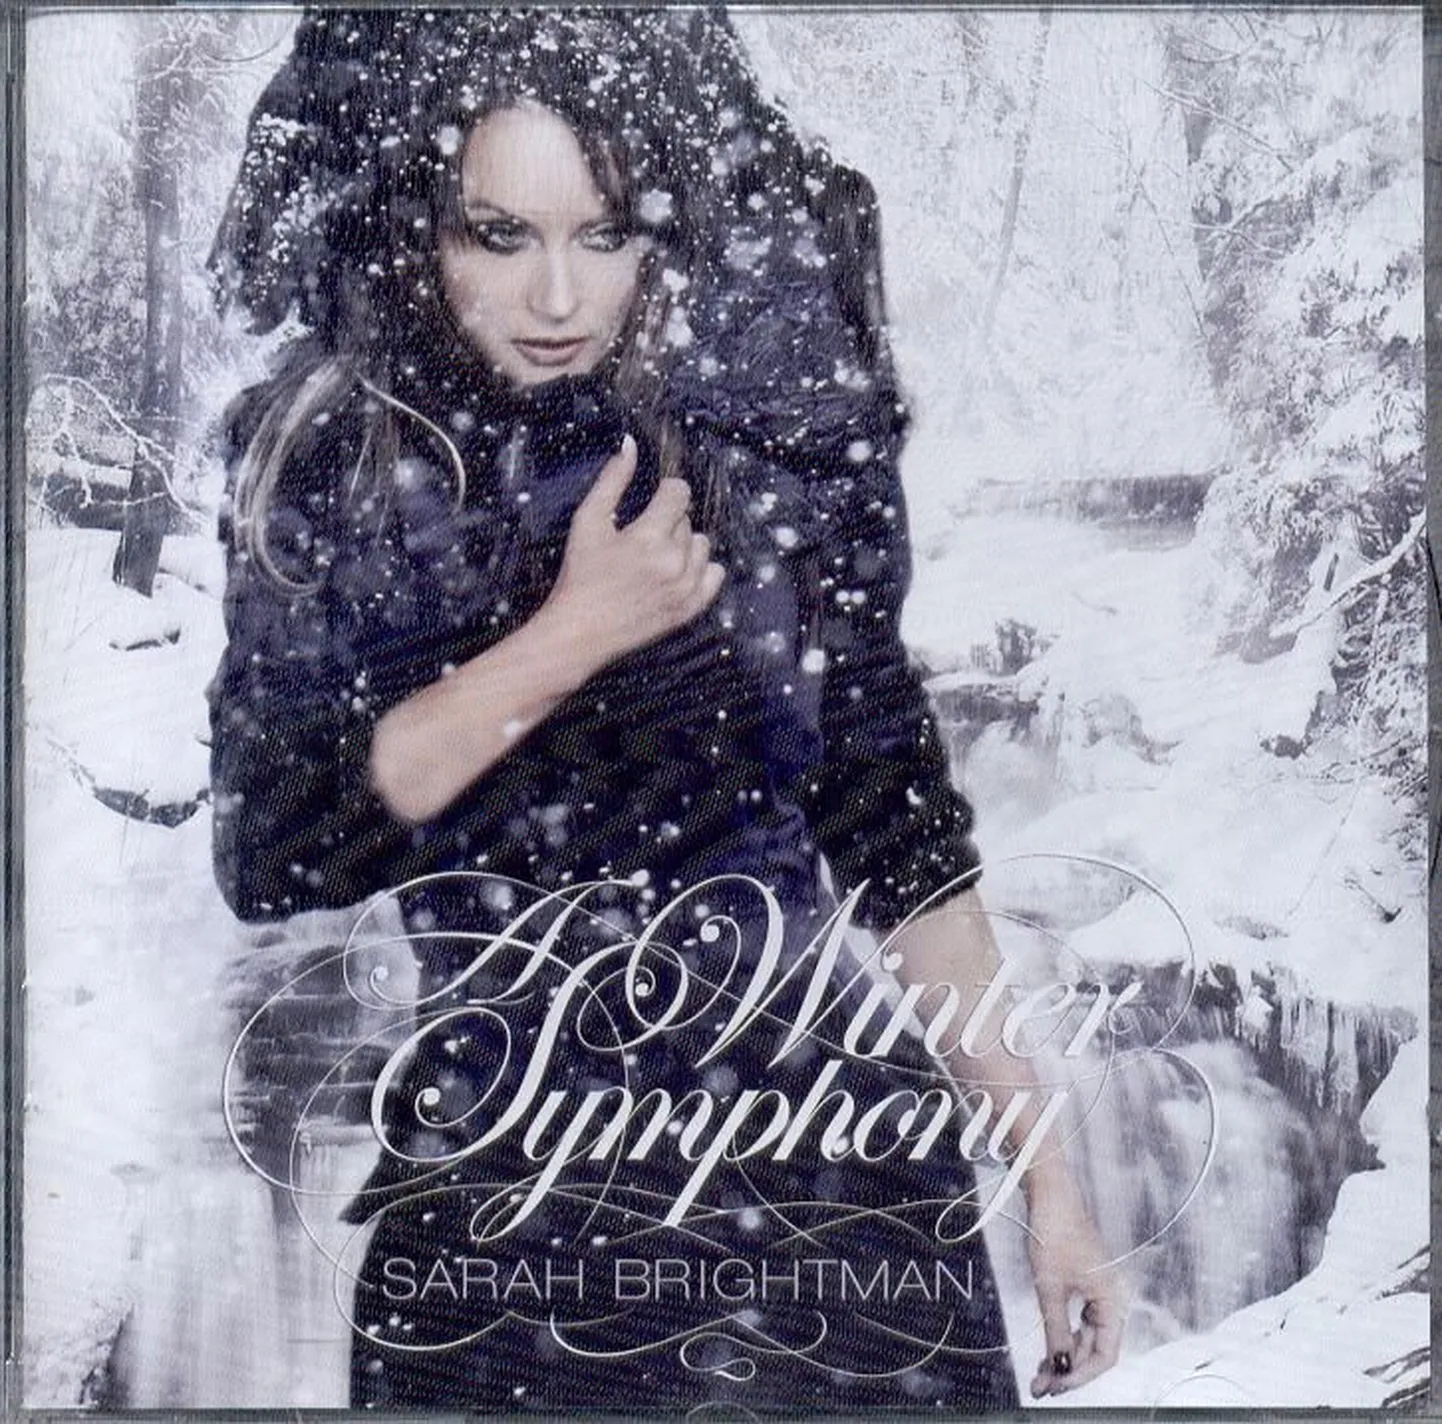 Sarah Brightmani “Winter Symphony”.